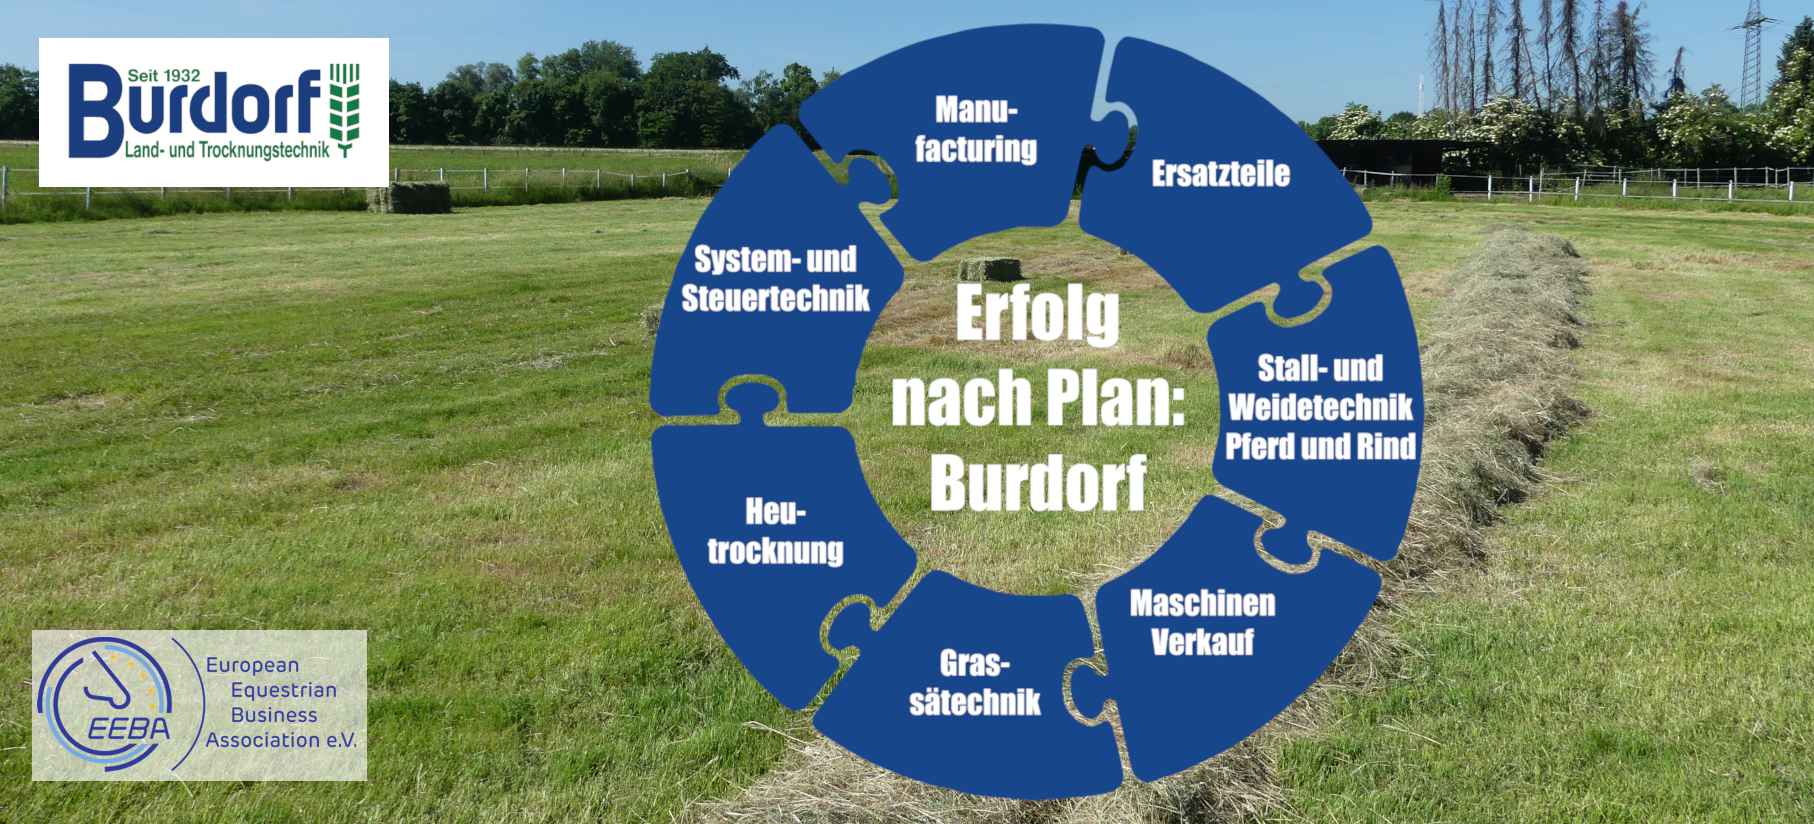 Burdorf_Plan